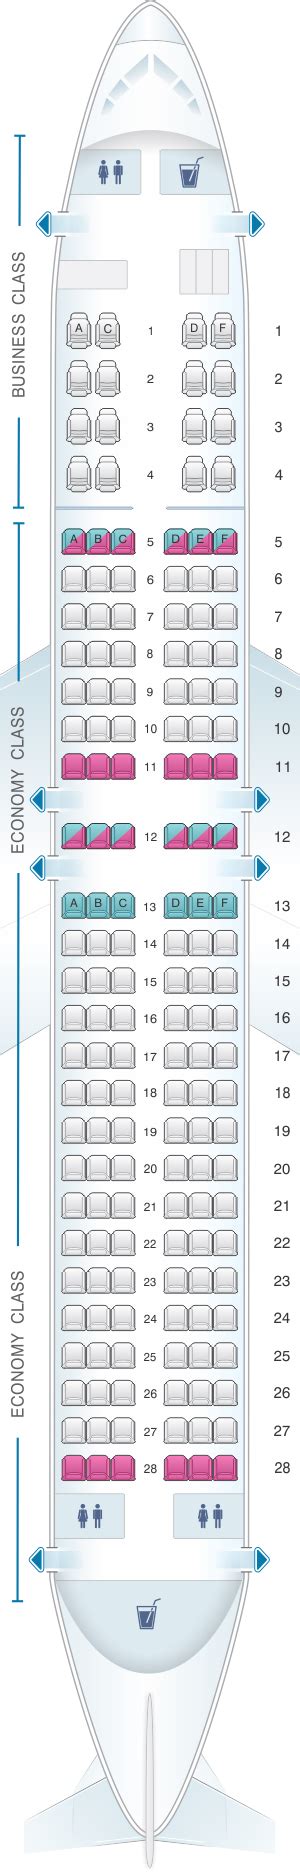 Seat Map Egyptair Boeing B737 800